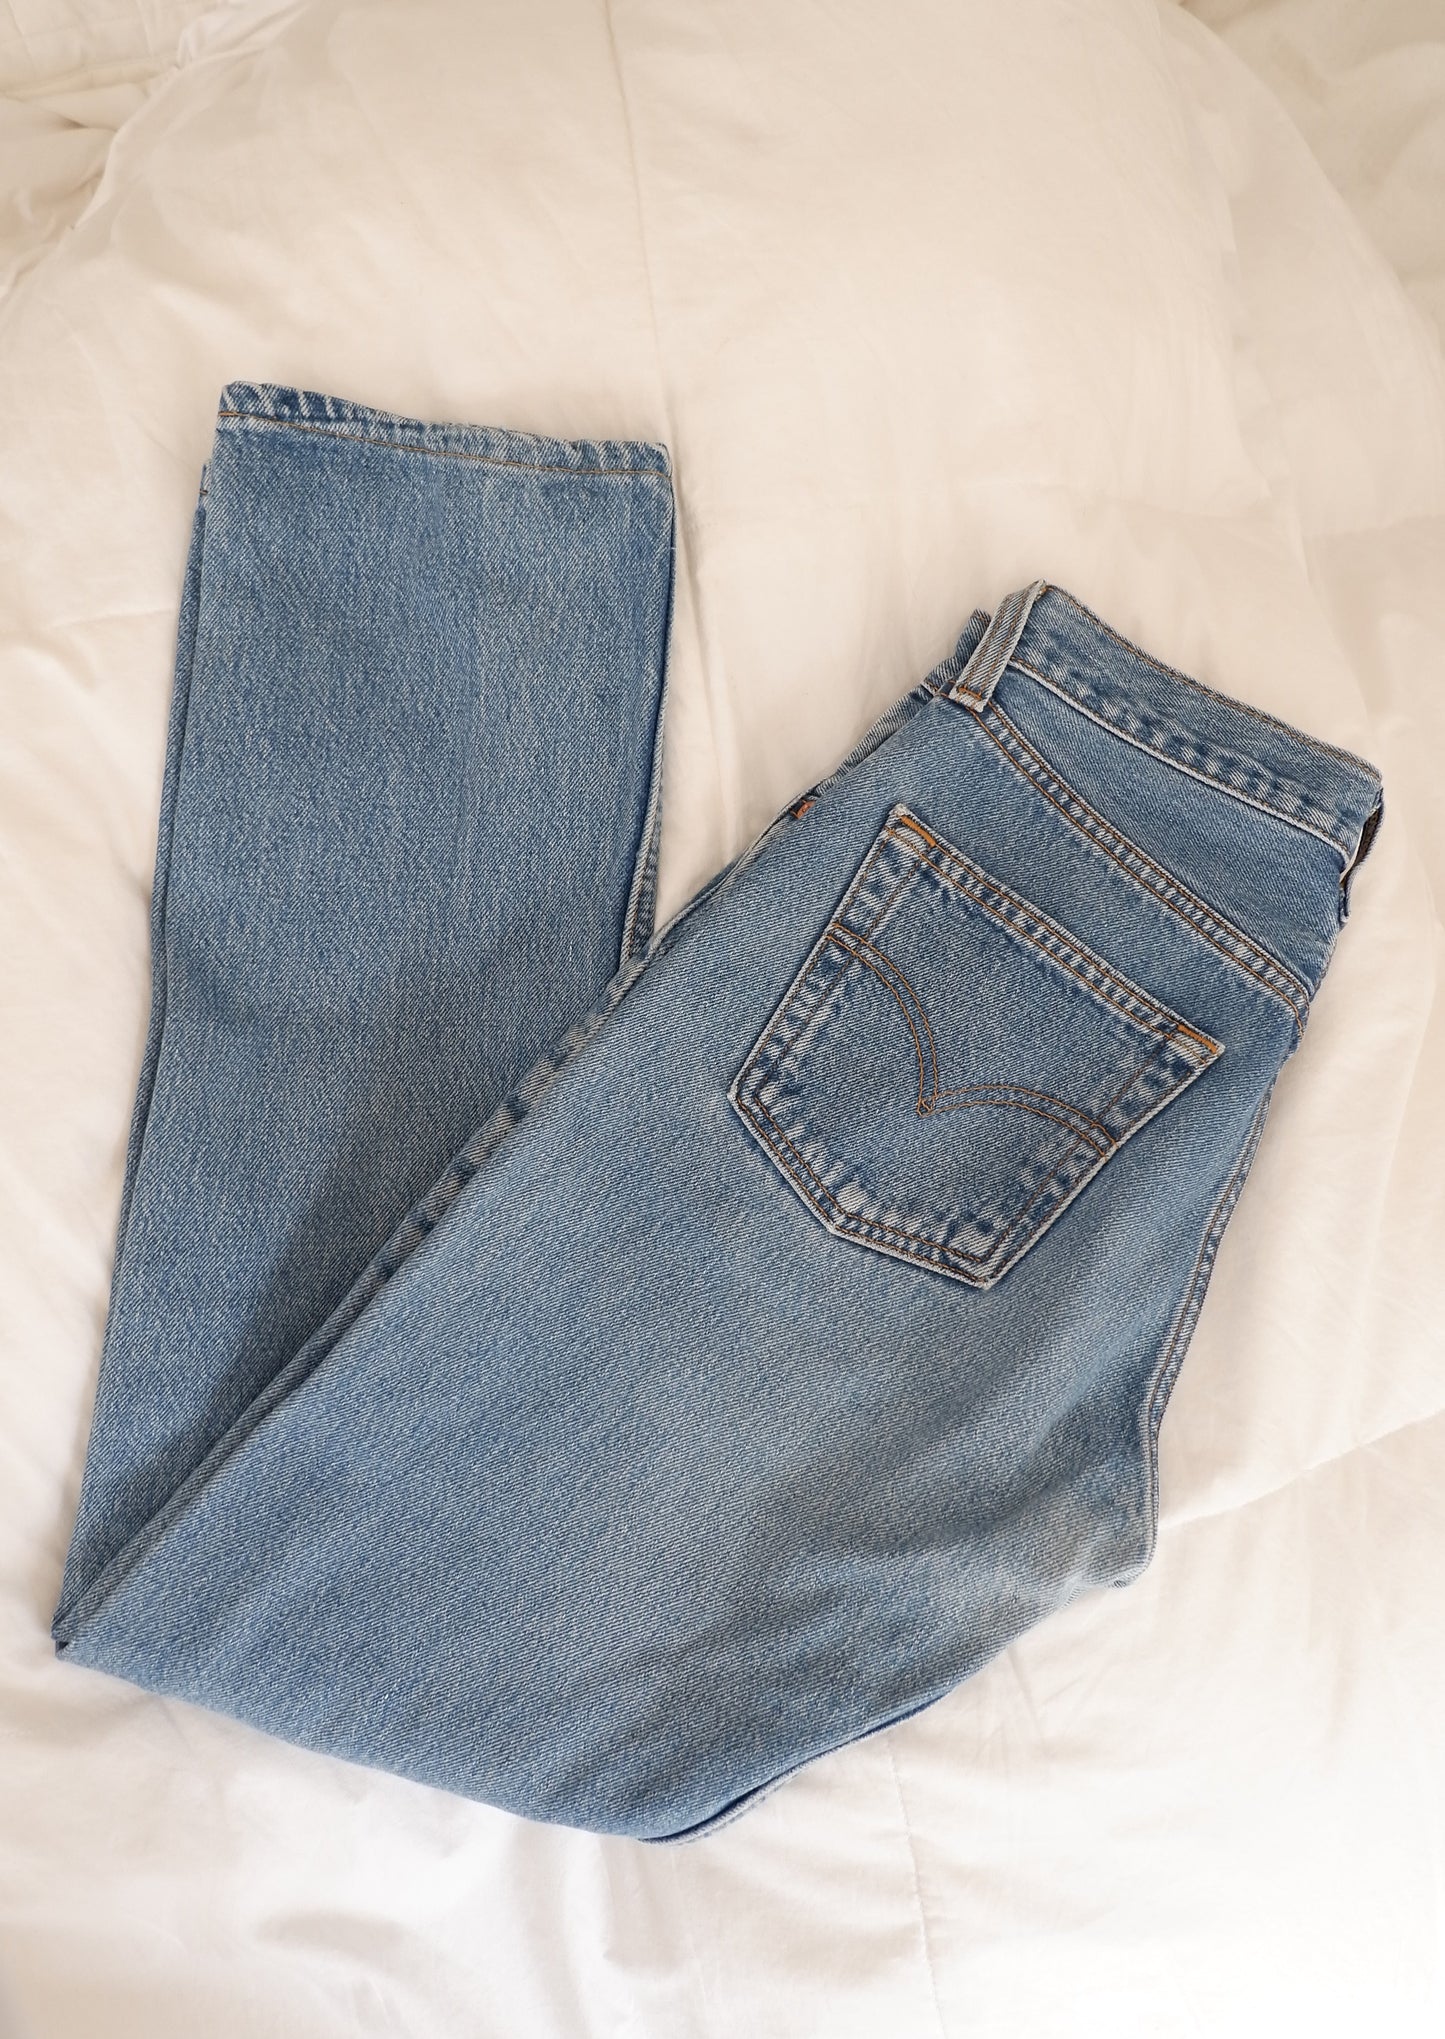 Levis Vintage 501 Medium Wash Jeans - 28